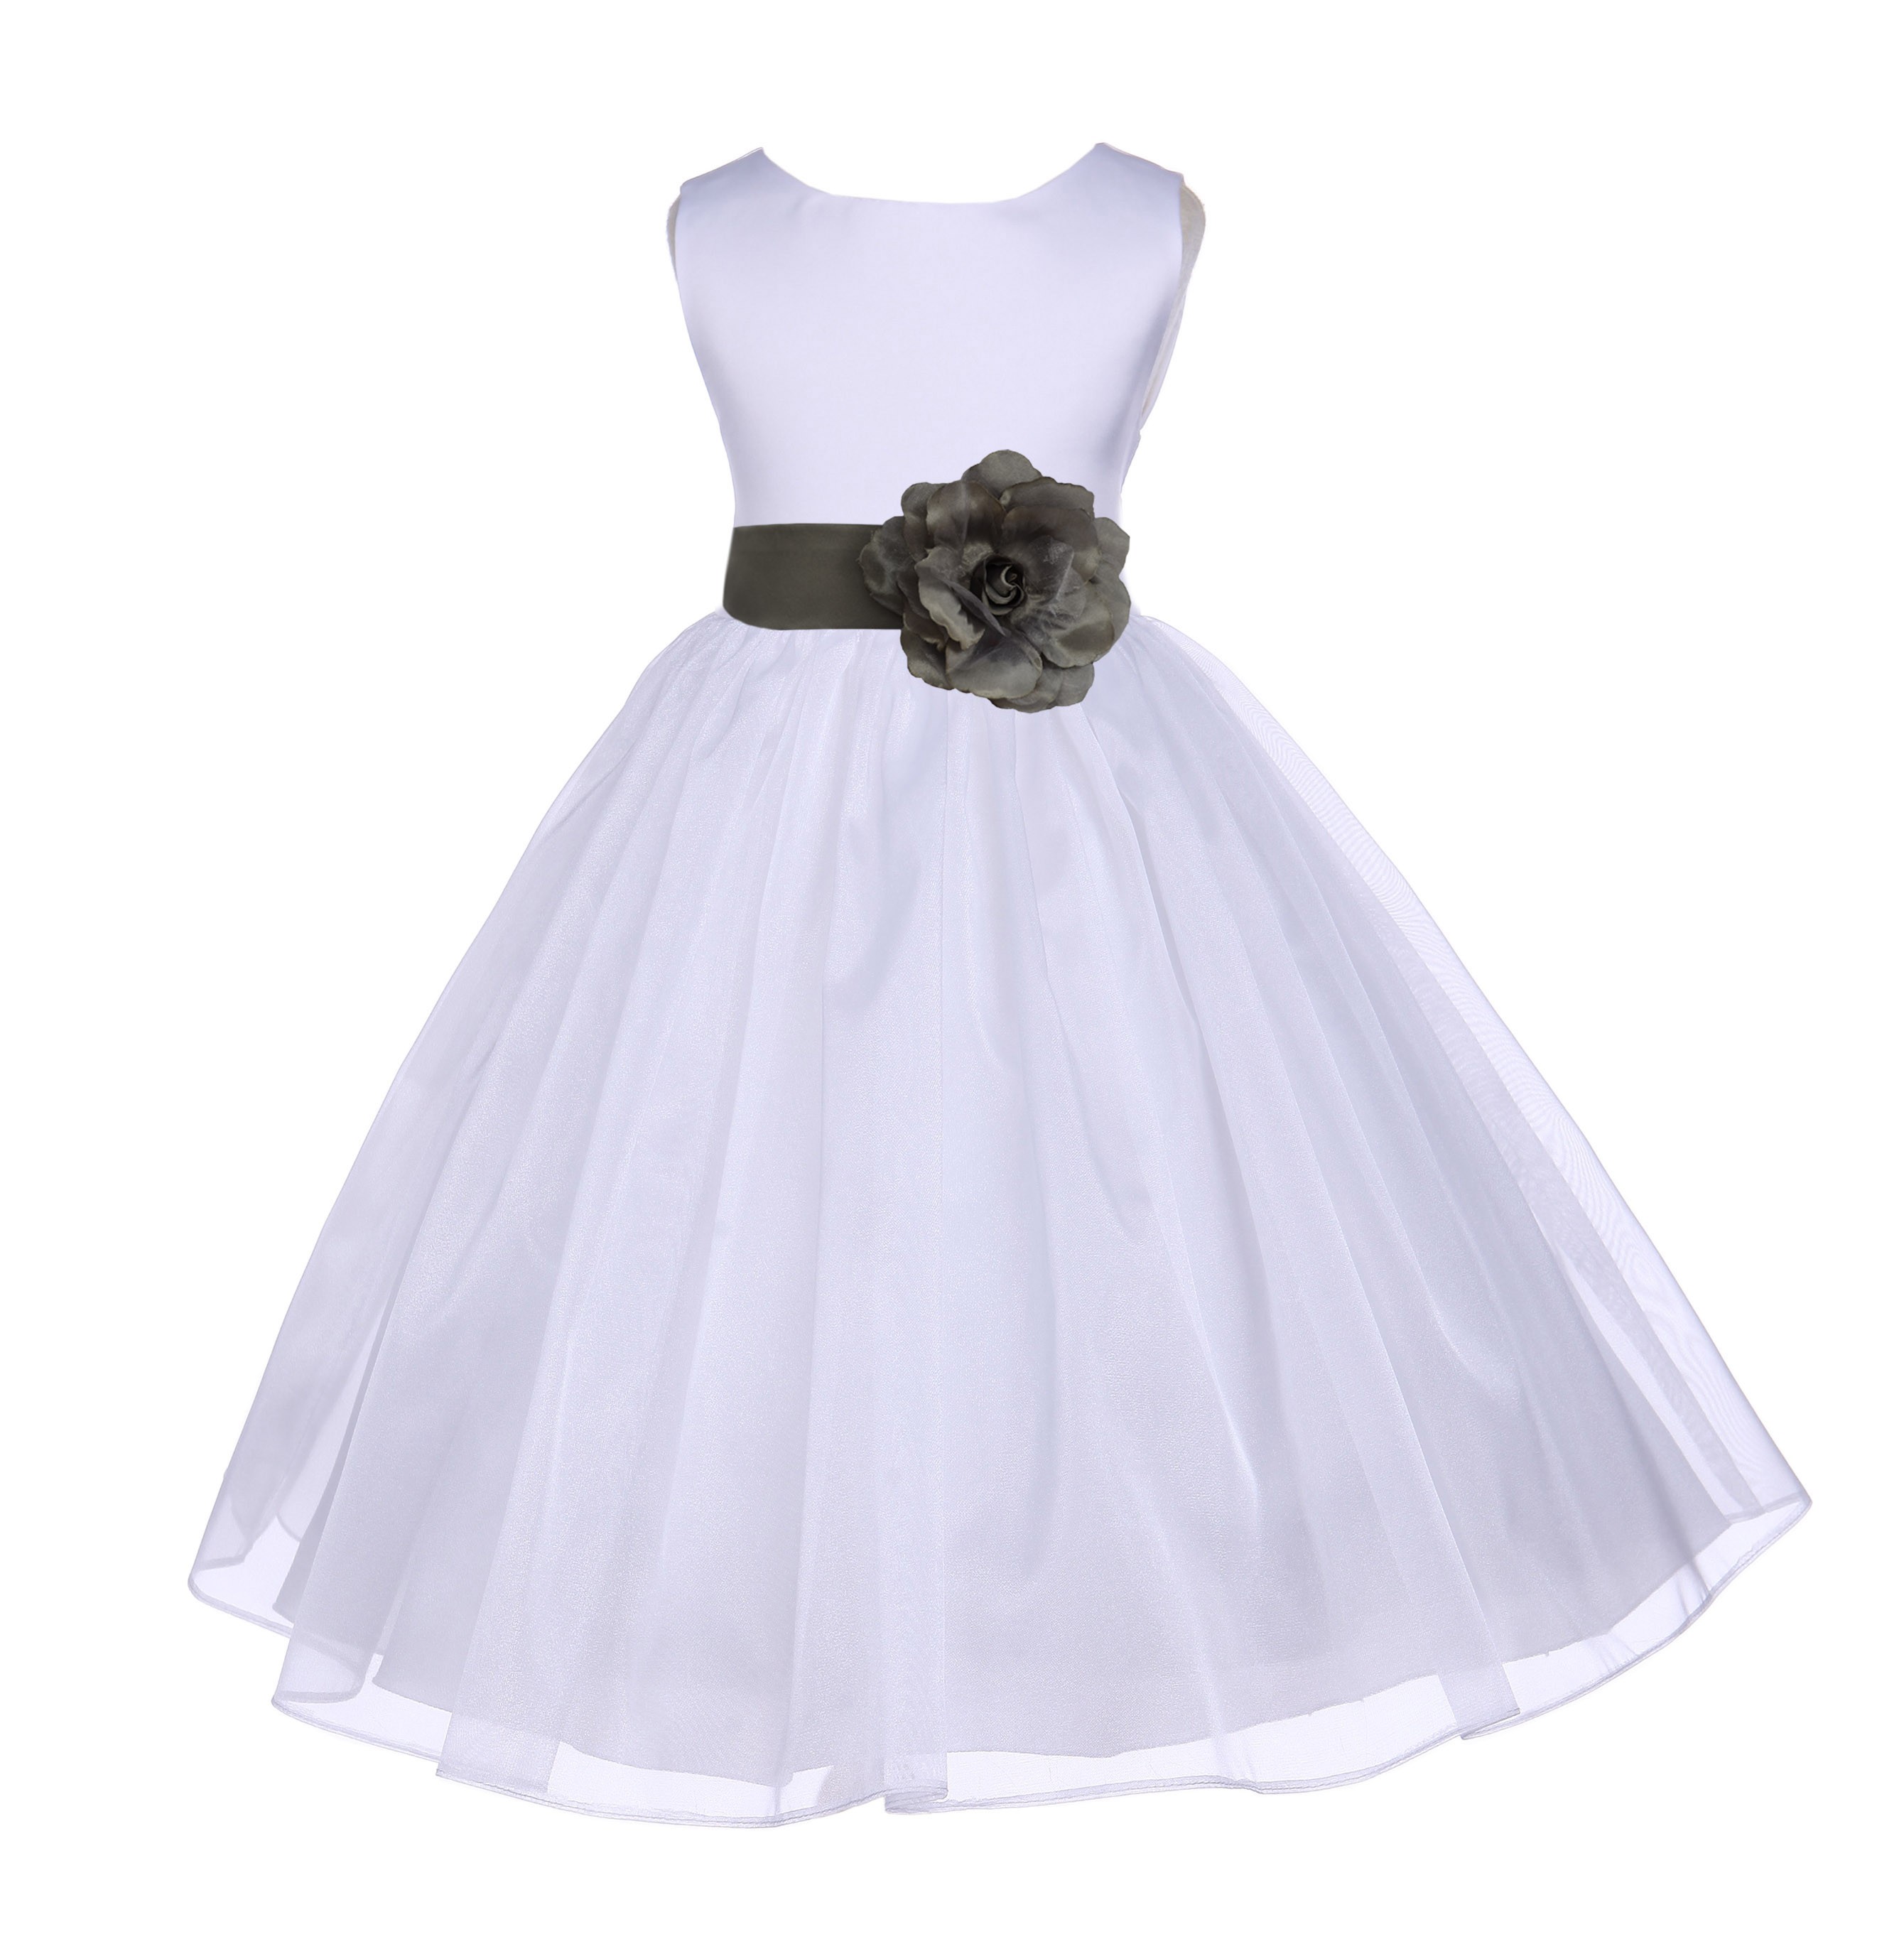 White/Mercury Satin Bodice Organza Skirt Flower Girl Dress 841T